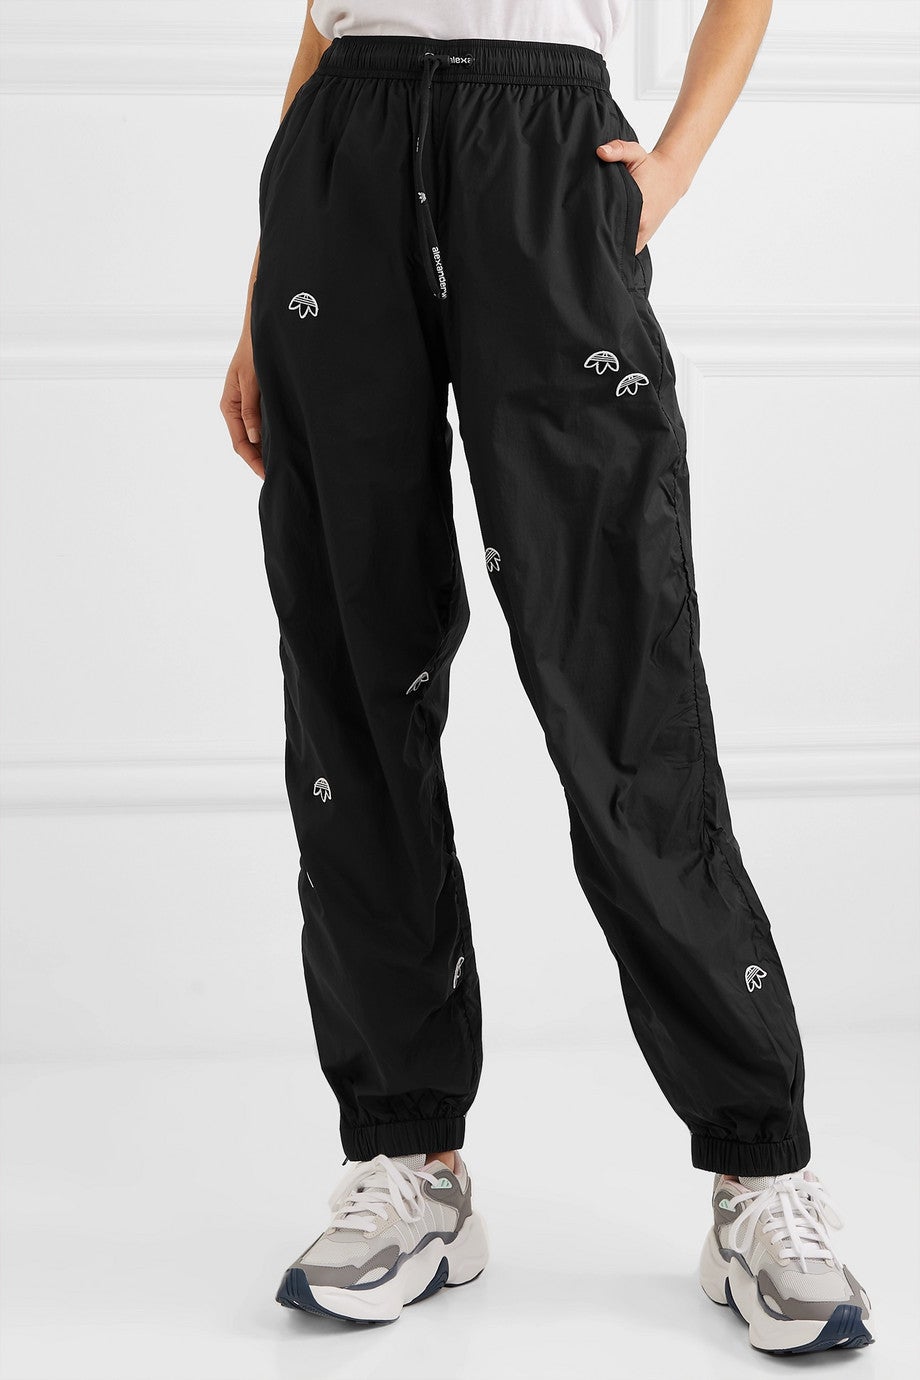 Adidas Originals by Alexander Wang + Appliquéd Shell Track Pants